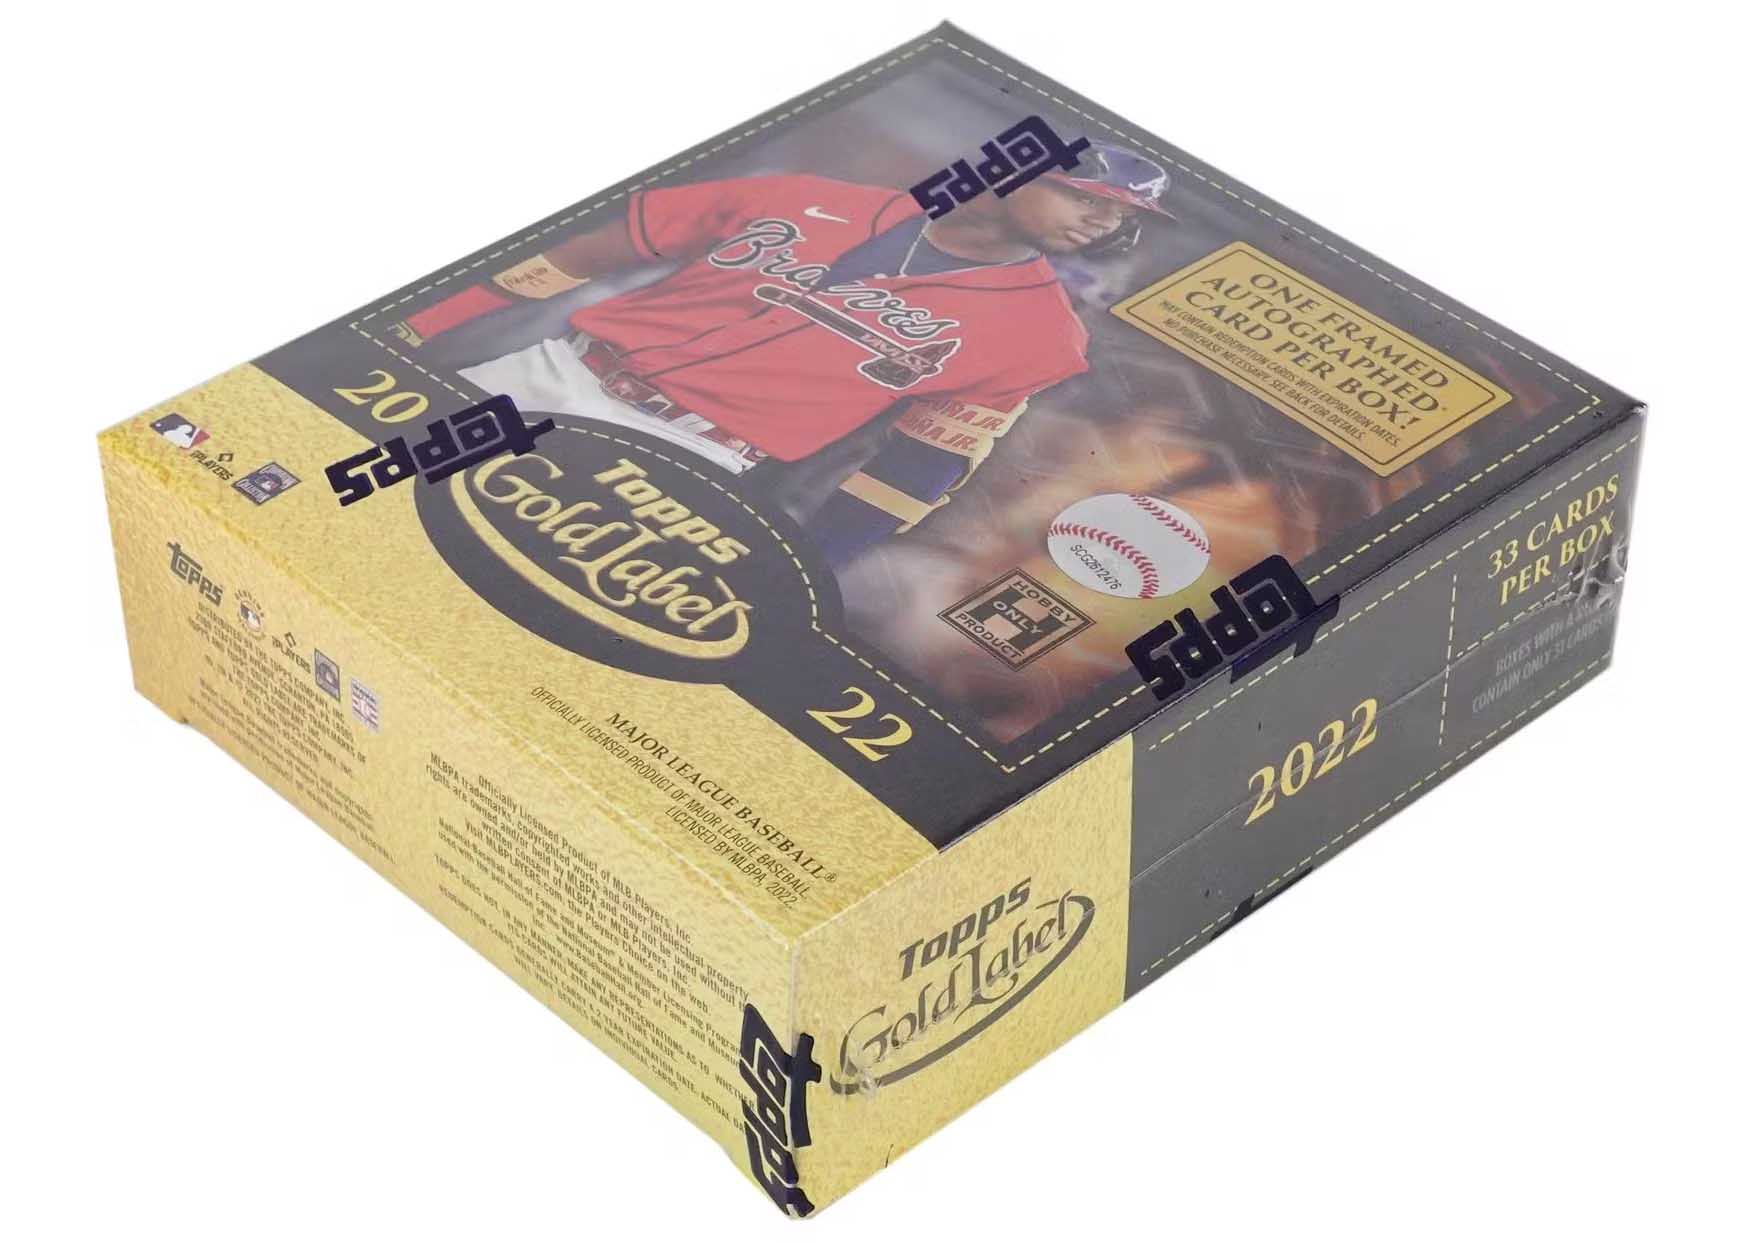 2022 Topps Gold Label Baseball Hobby Box (33 Card Count)